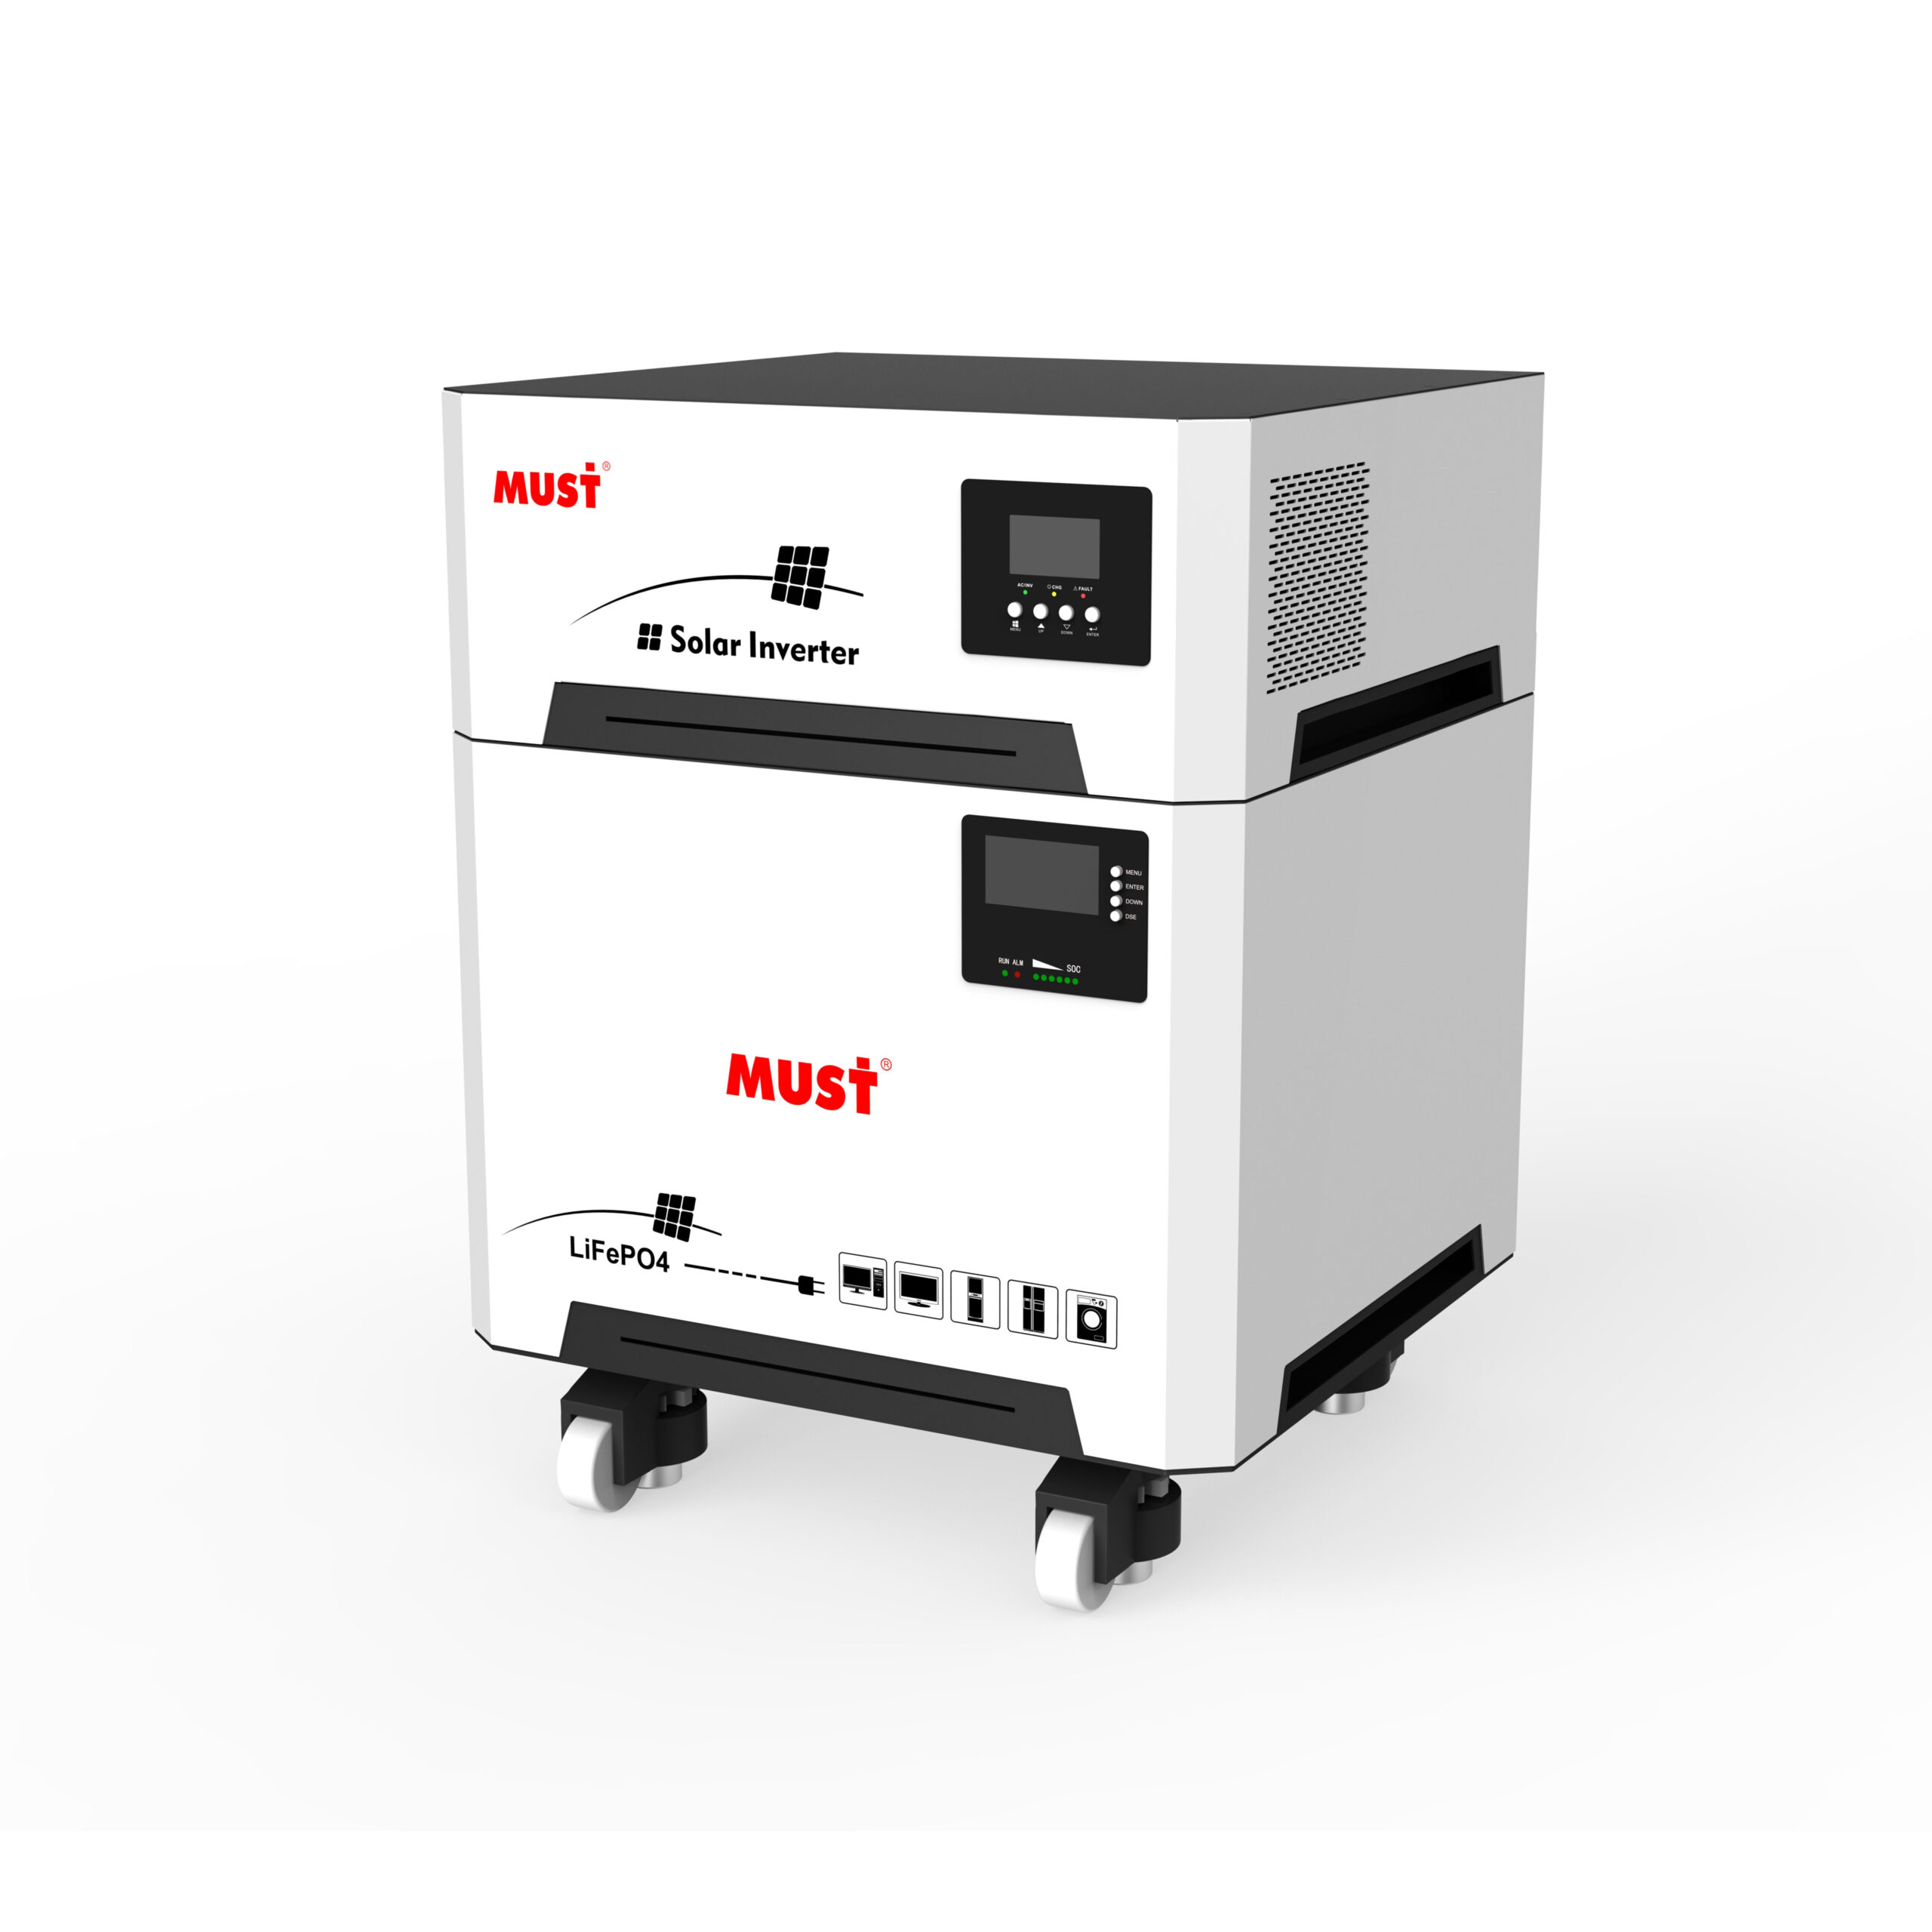 HBP3300 TLV 系列移动叠加式太阳能锂电储能系统 (AC:110V+110V 2-6KW)